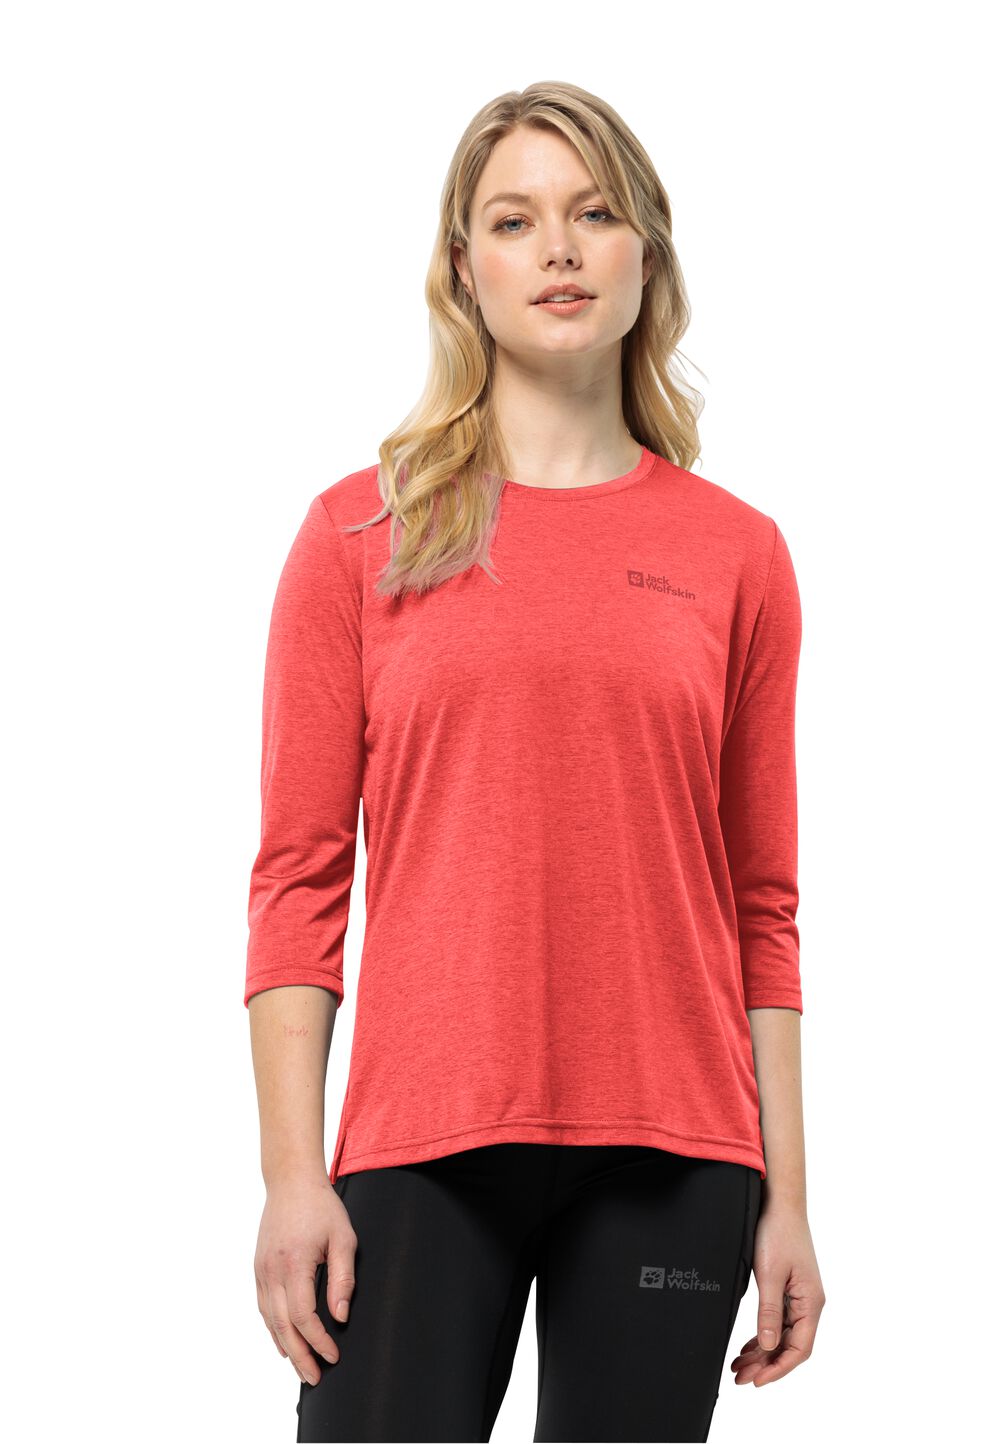 Jack Wolfskin Crosstrail 3 4 T-Shirt Women Functioneel shirt Dames XL rood vibrant red